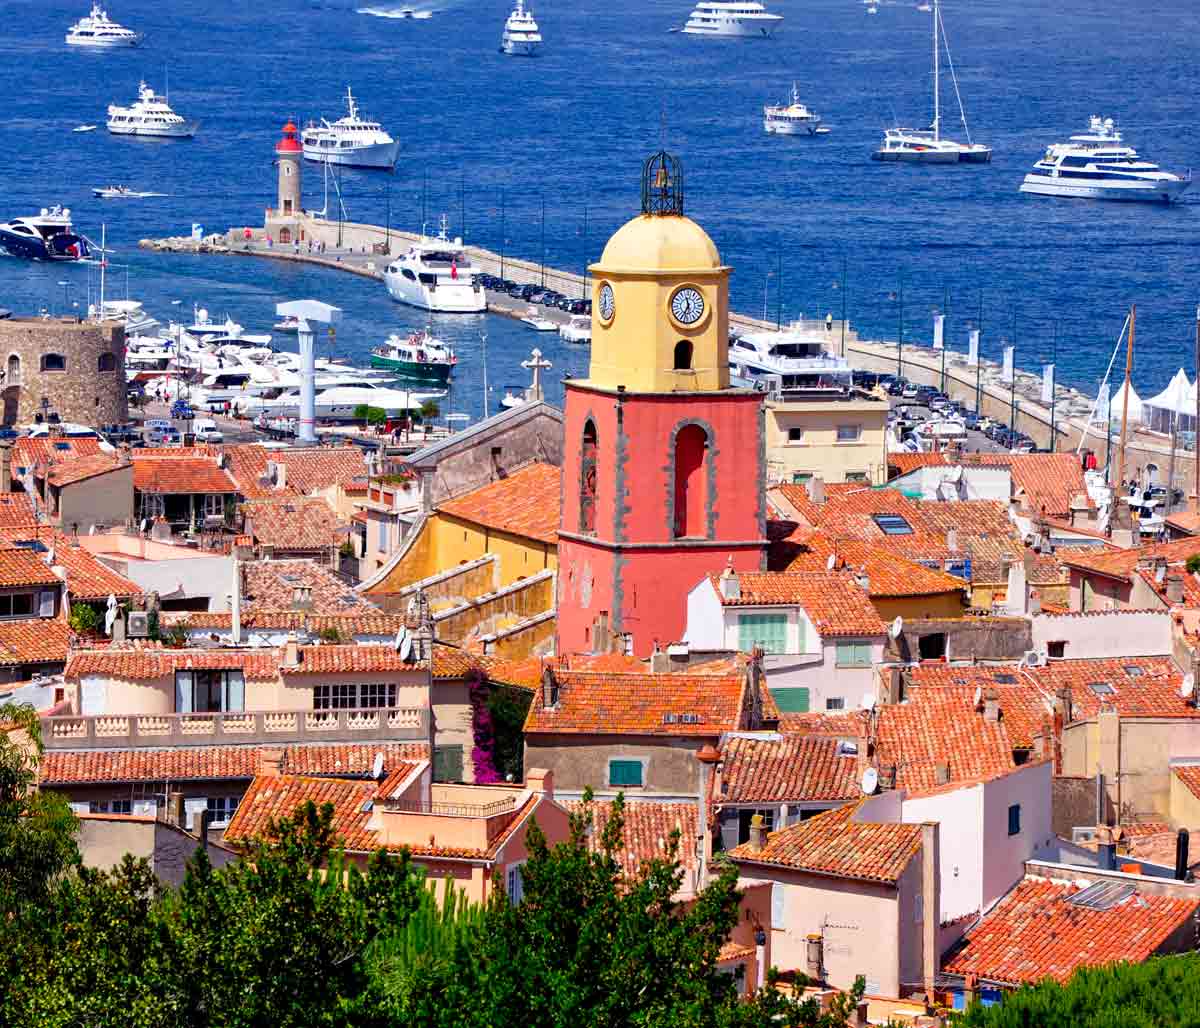 Livraison du sirocco de Saint-Tropez | Scirocco Mediterranean Experience